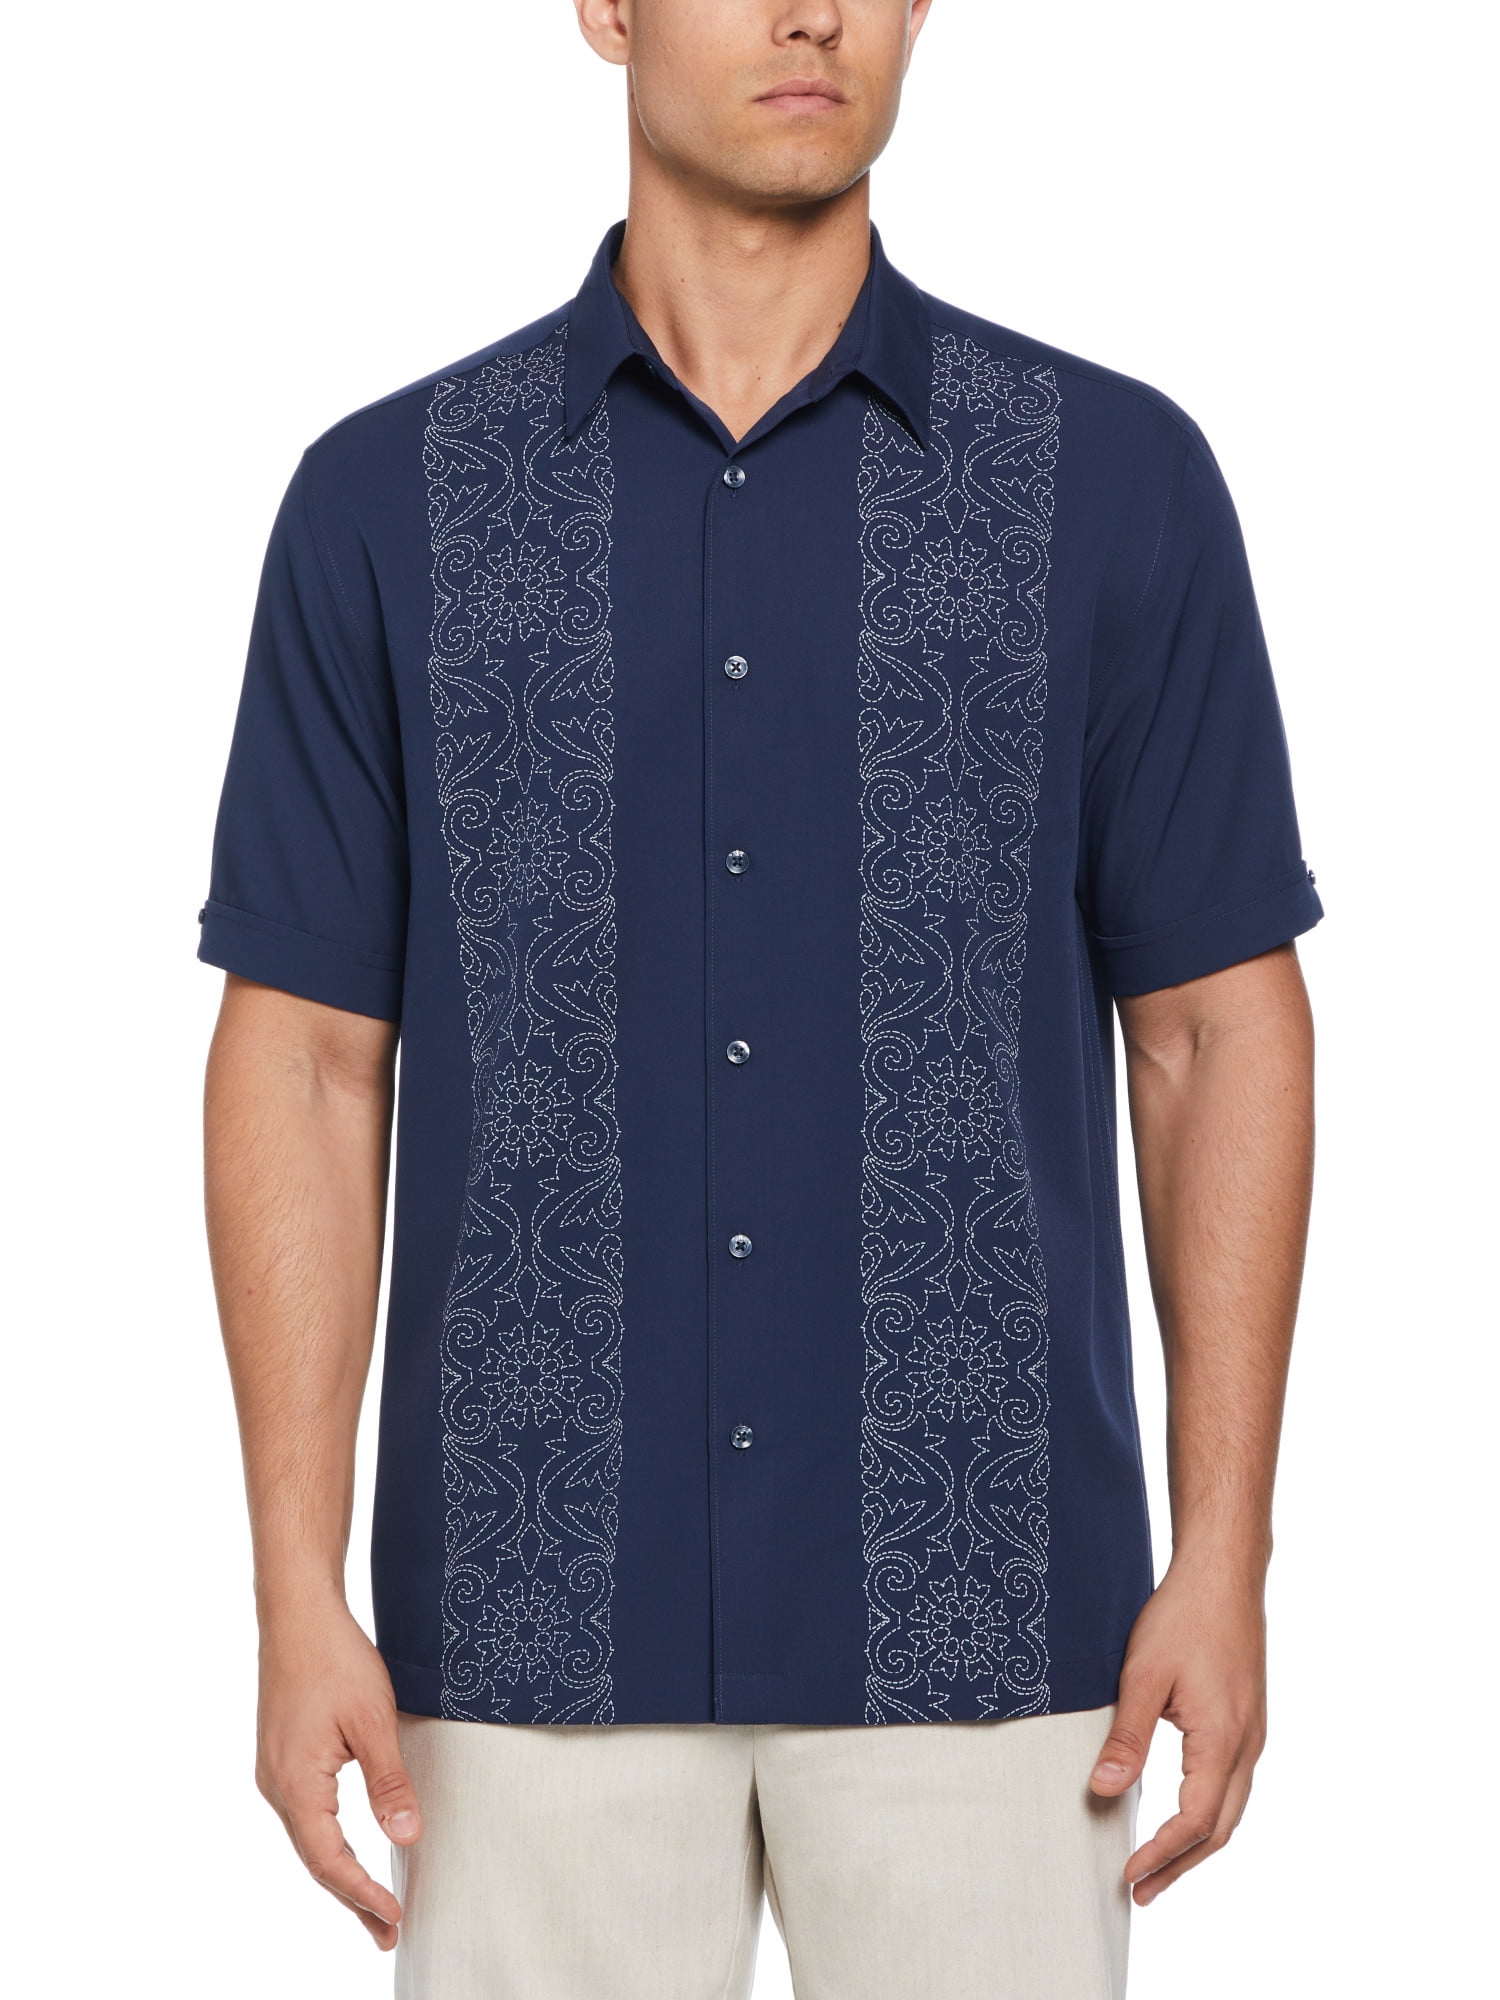 Cafe Luna Men's Textured Panel Print Woven Shirt - Walmart.com